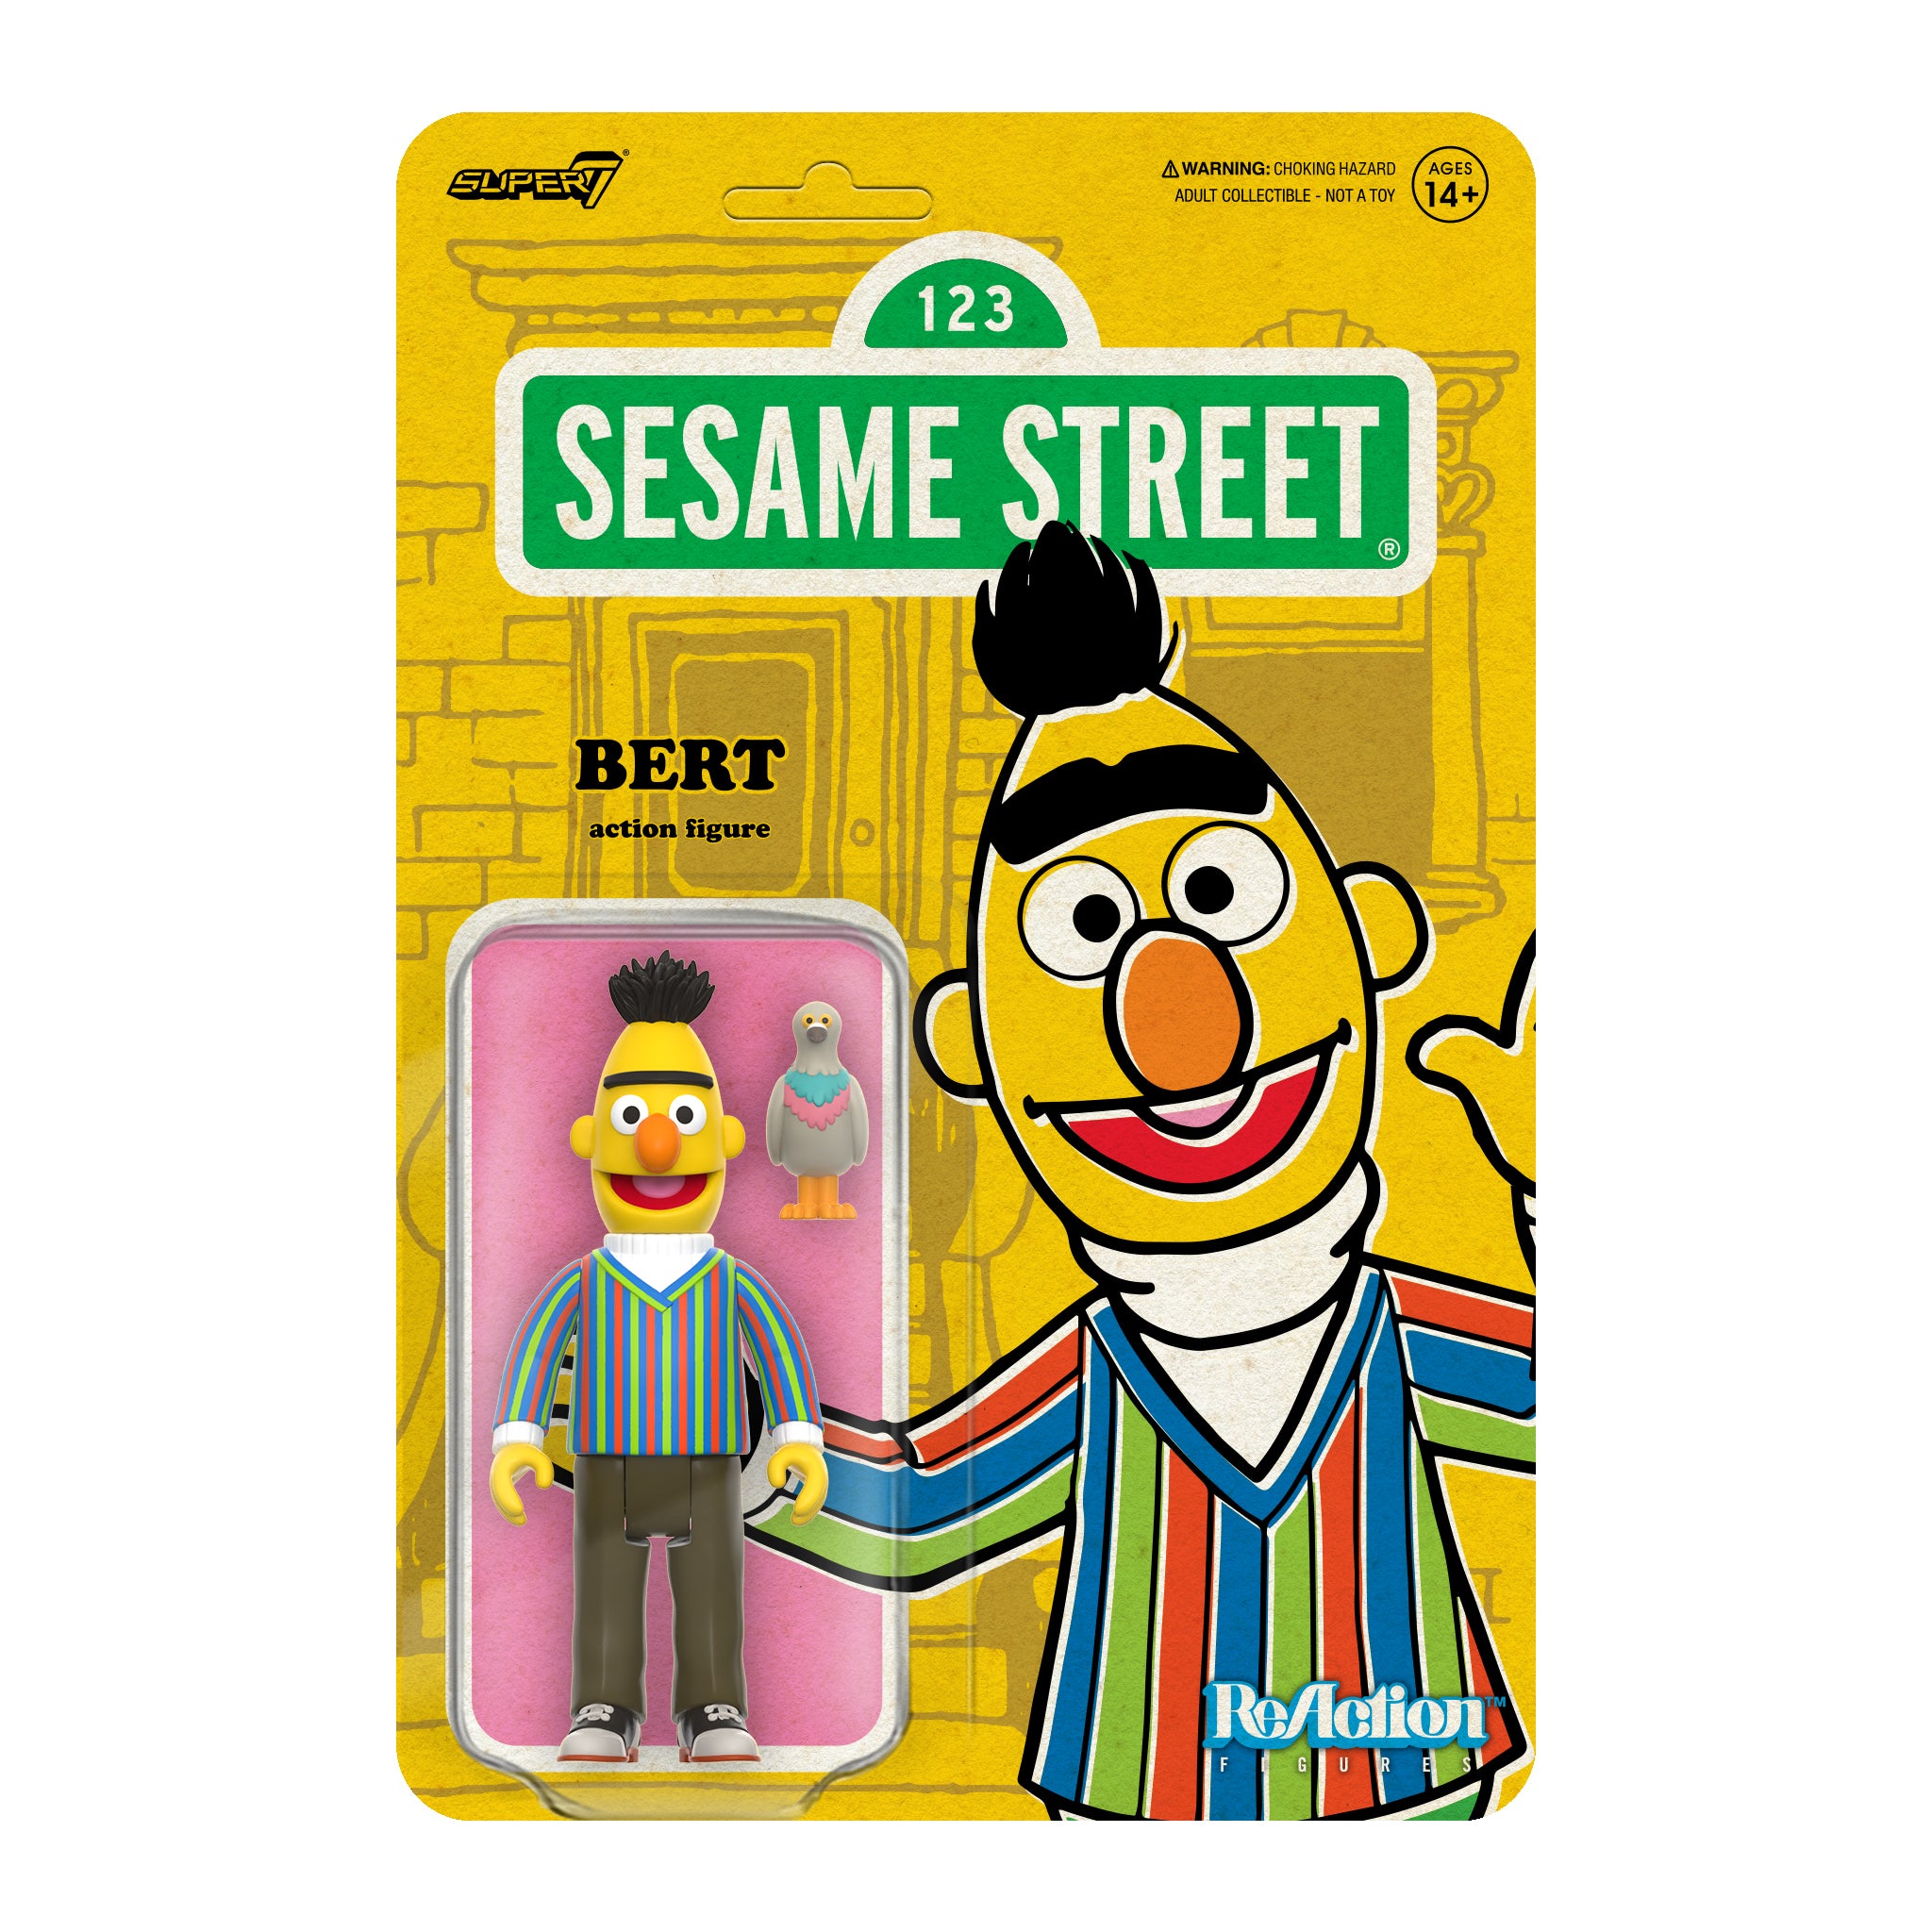 Sesame Street ReAction Figures Wave 01 - Bert